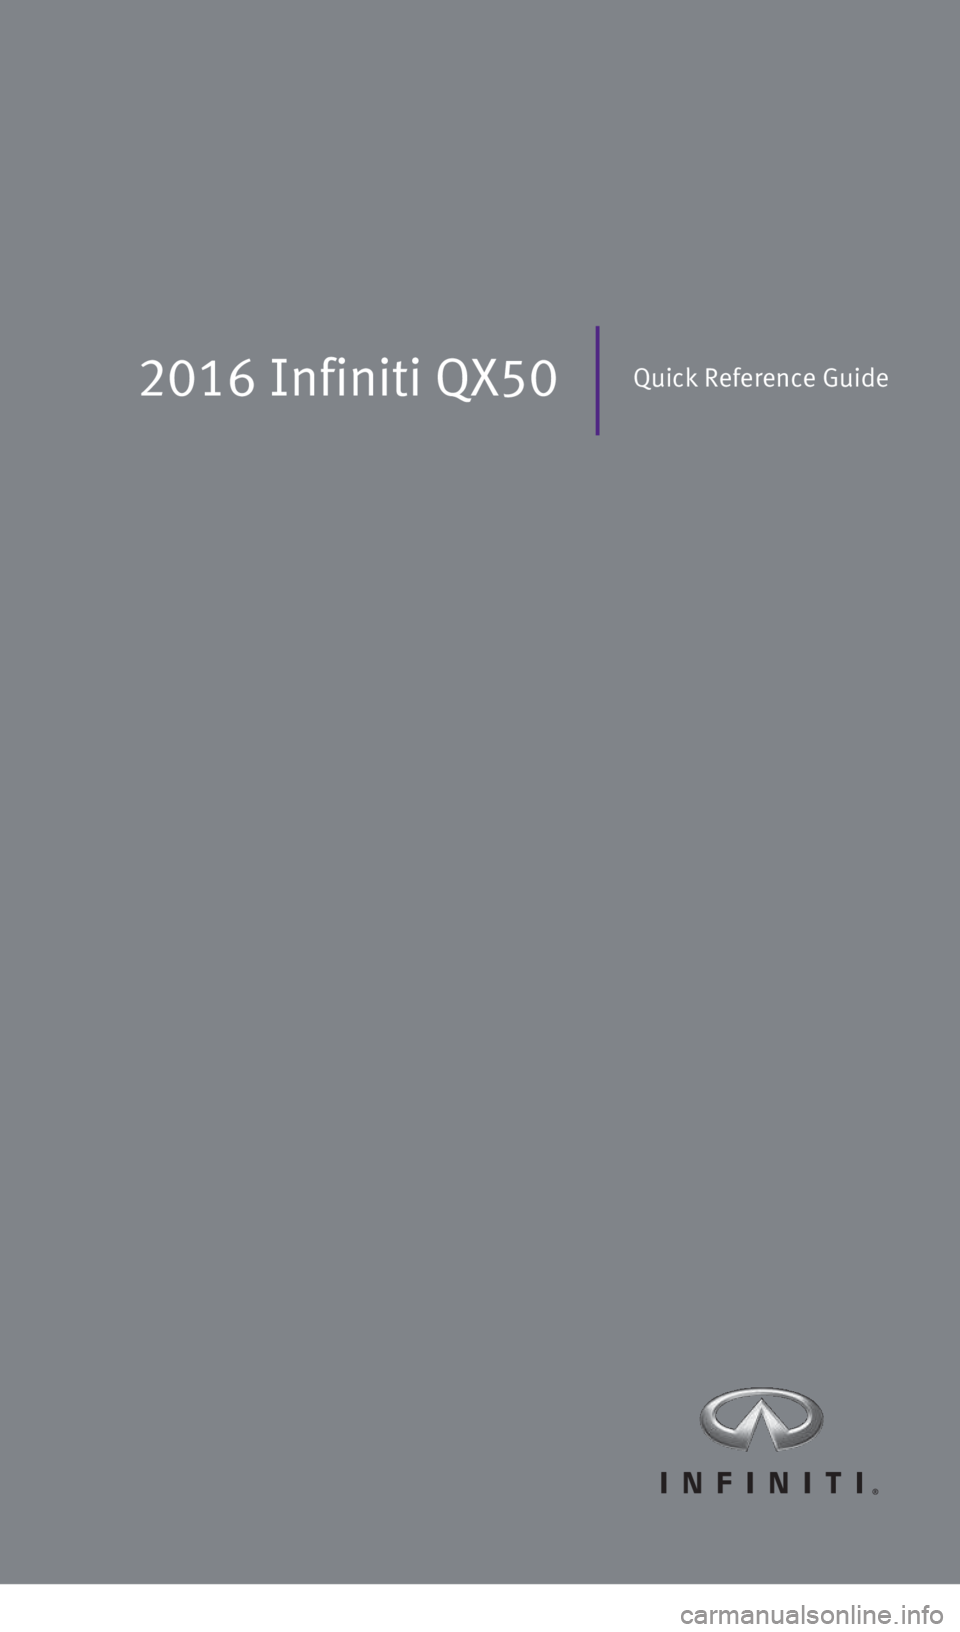 INFINITI QX50 2016  Quick Reference Guide 2016 Infiniti QX50Quick Reference Guide
2128163_16b_QX50_US_pQRG_091515.indd   29/15/15   2:54 PM 